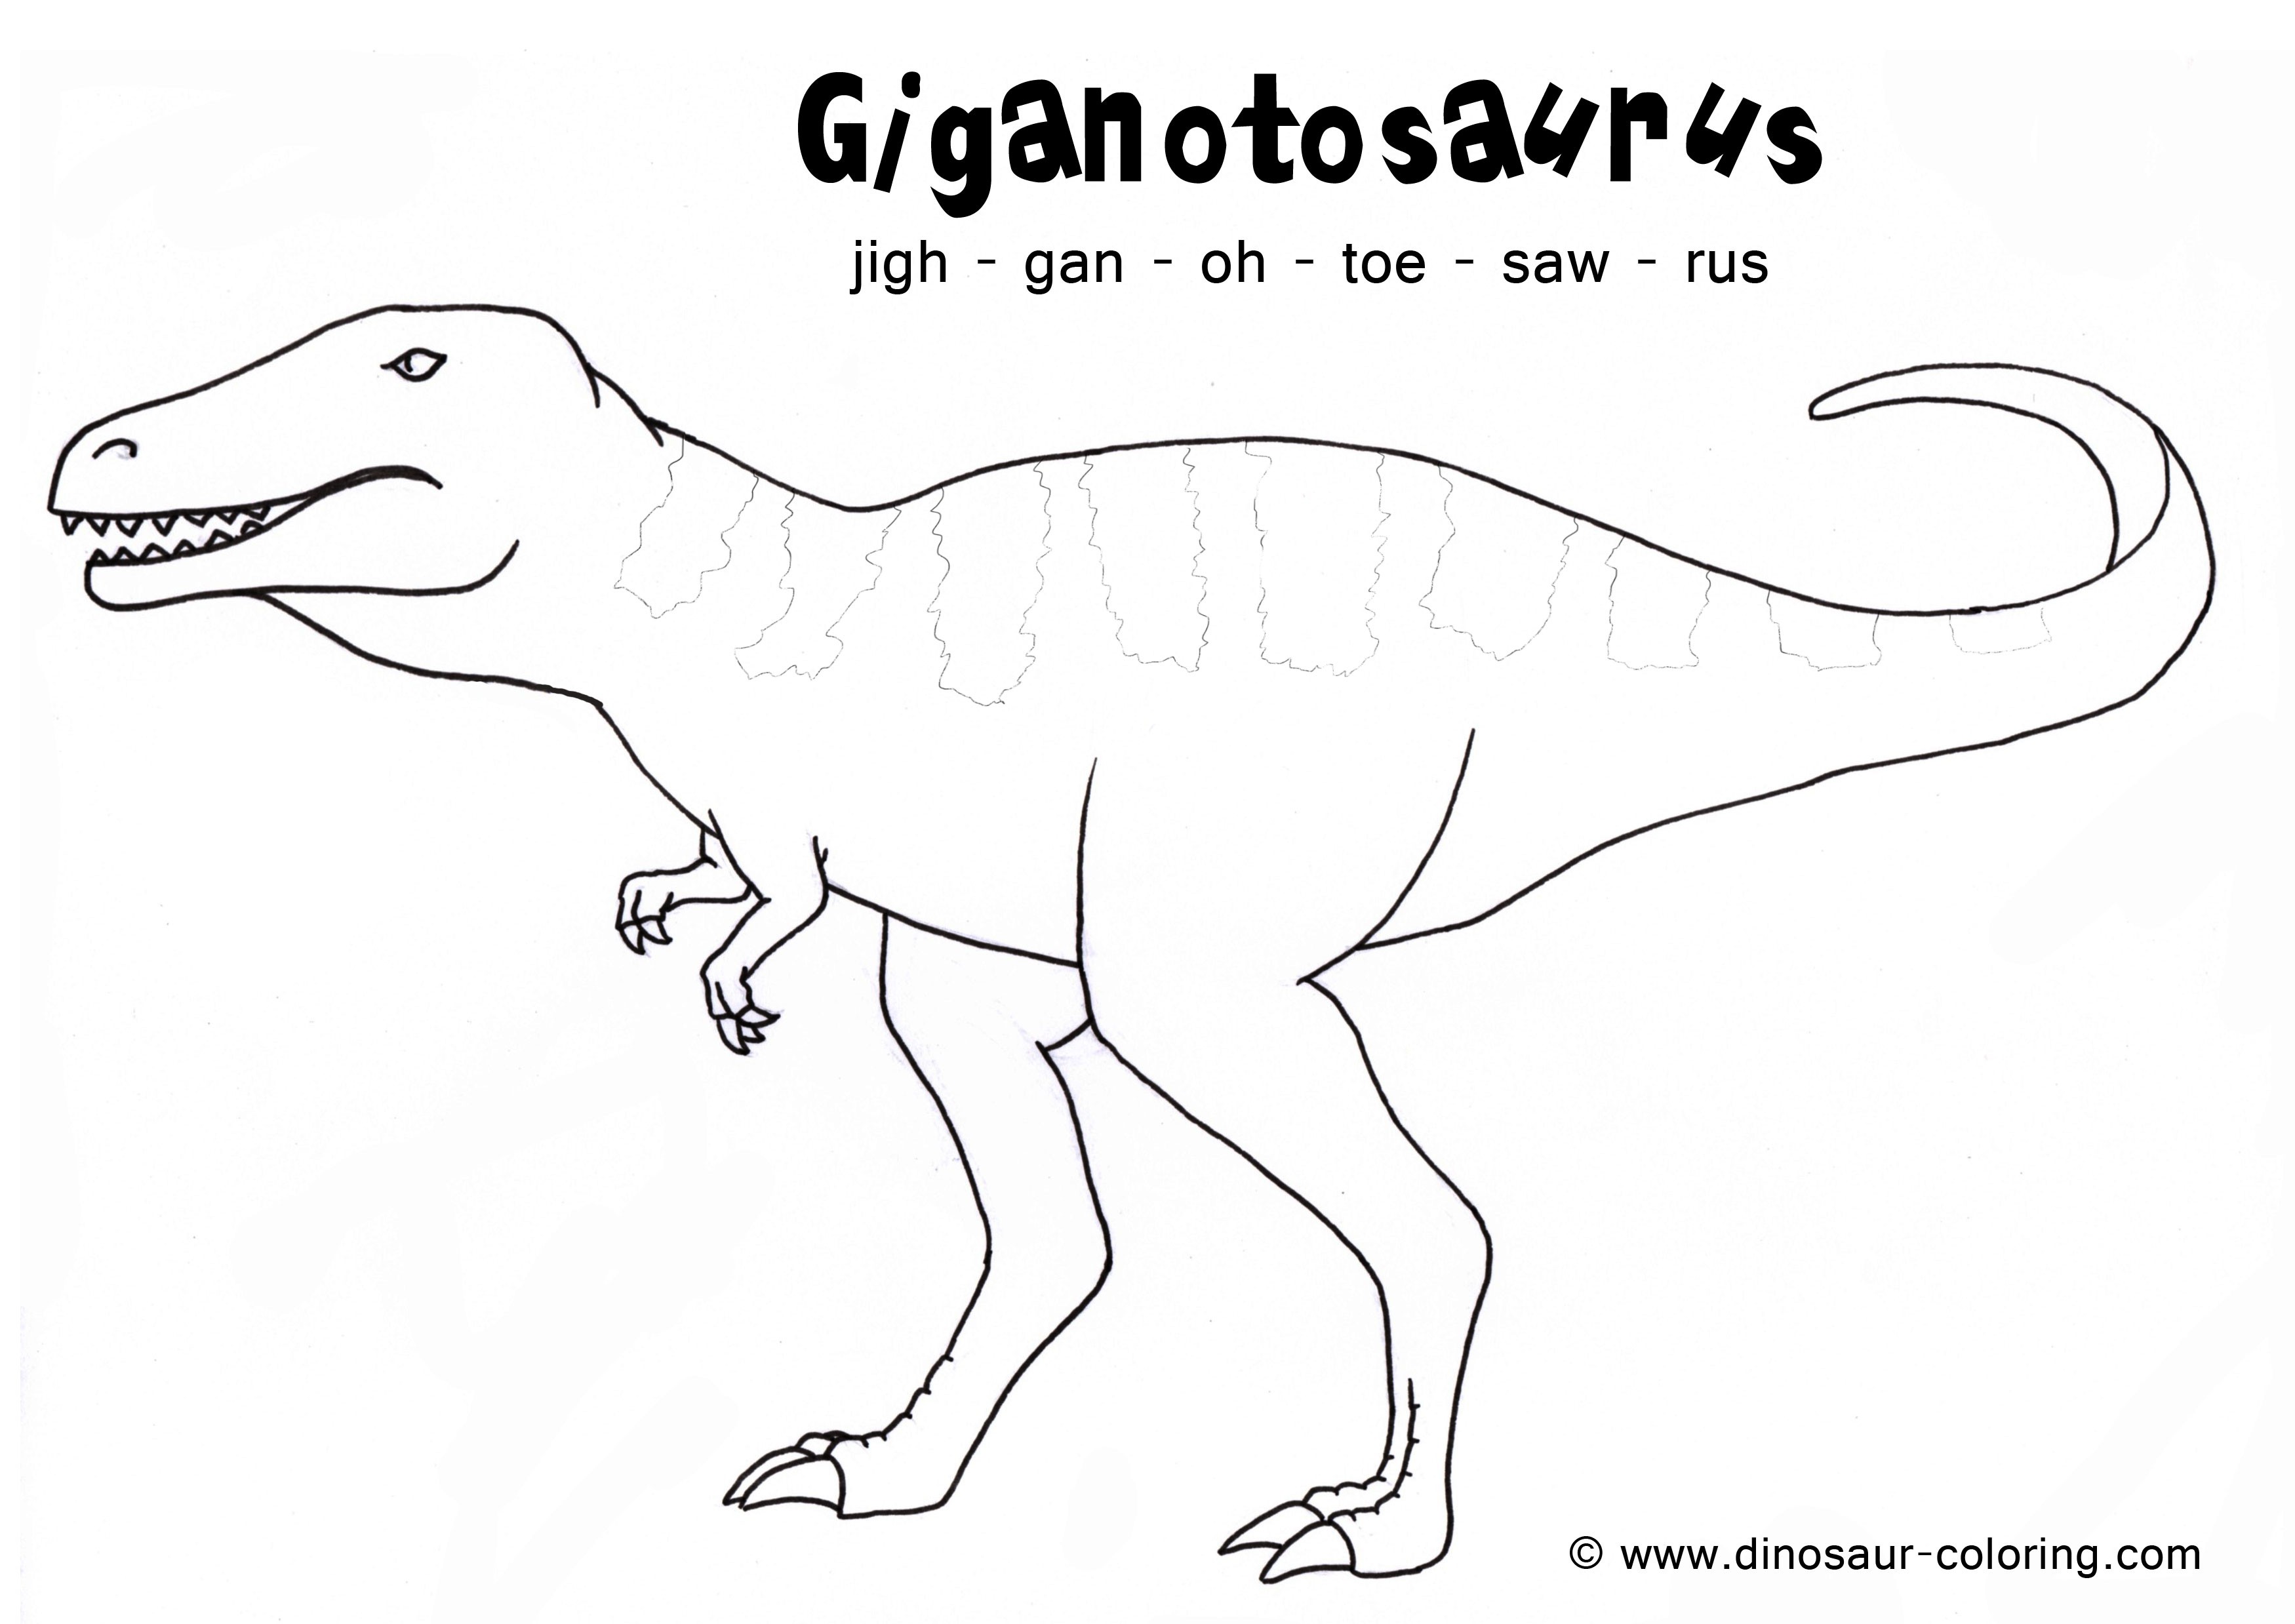 Dinosaur Coloring Pages Giganotosaurus